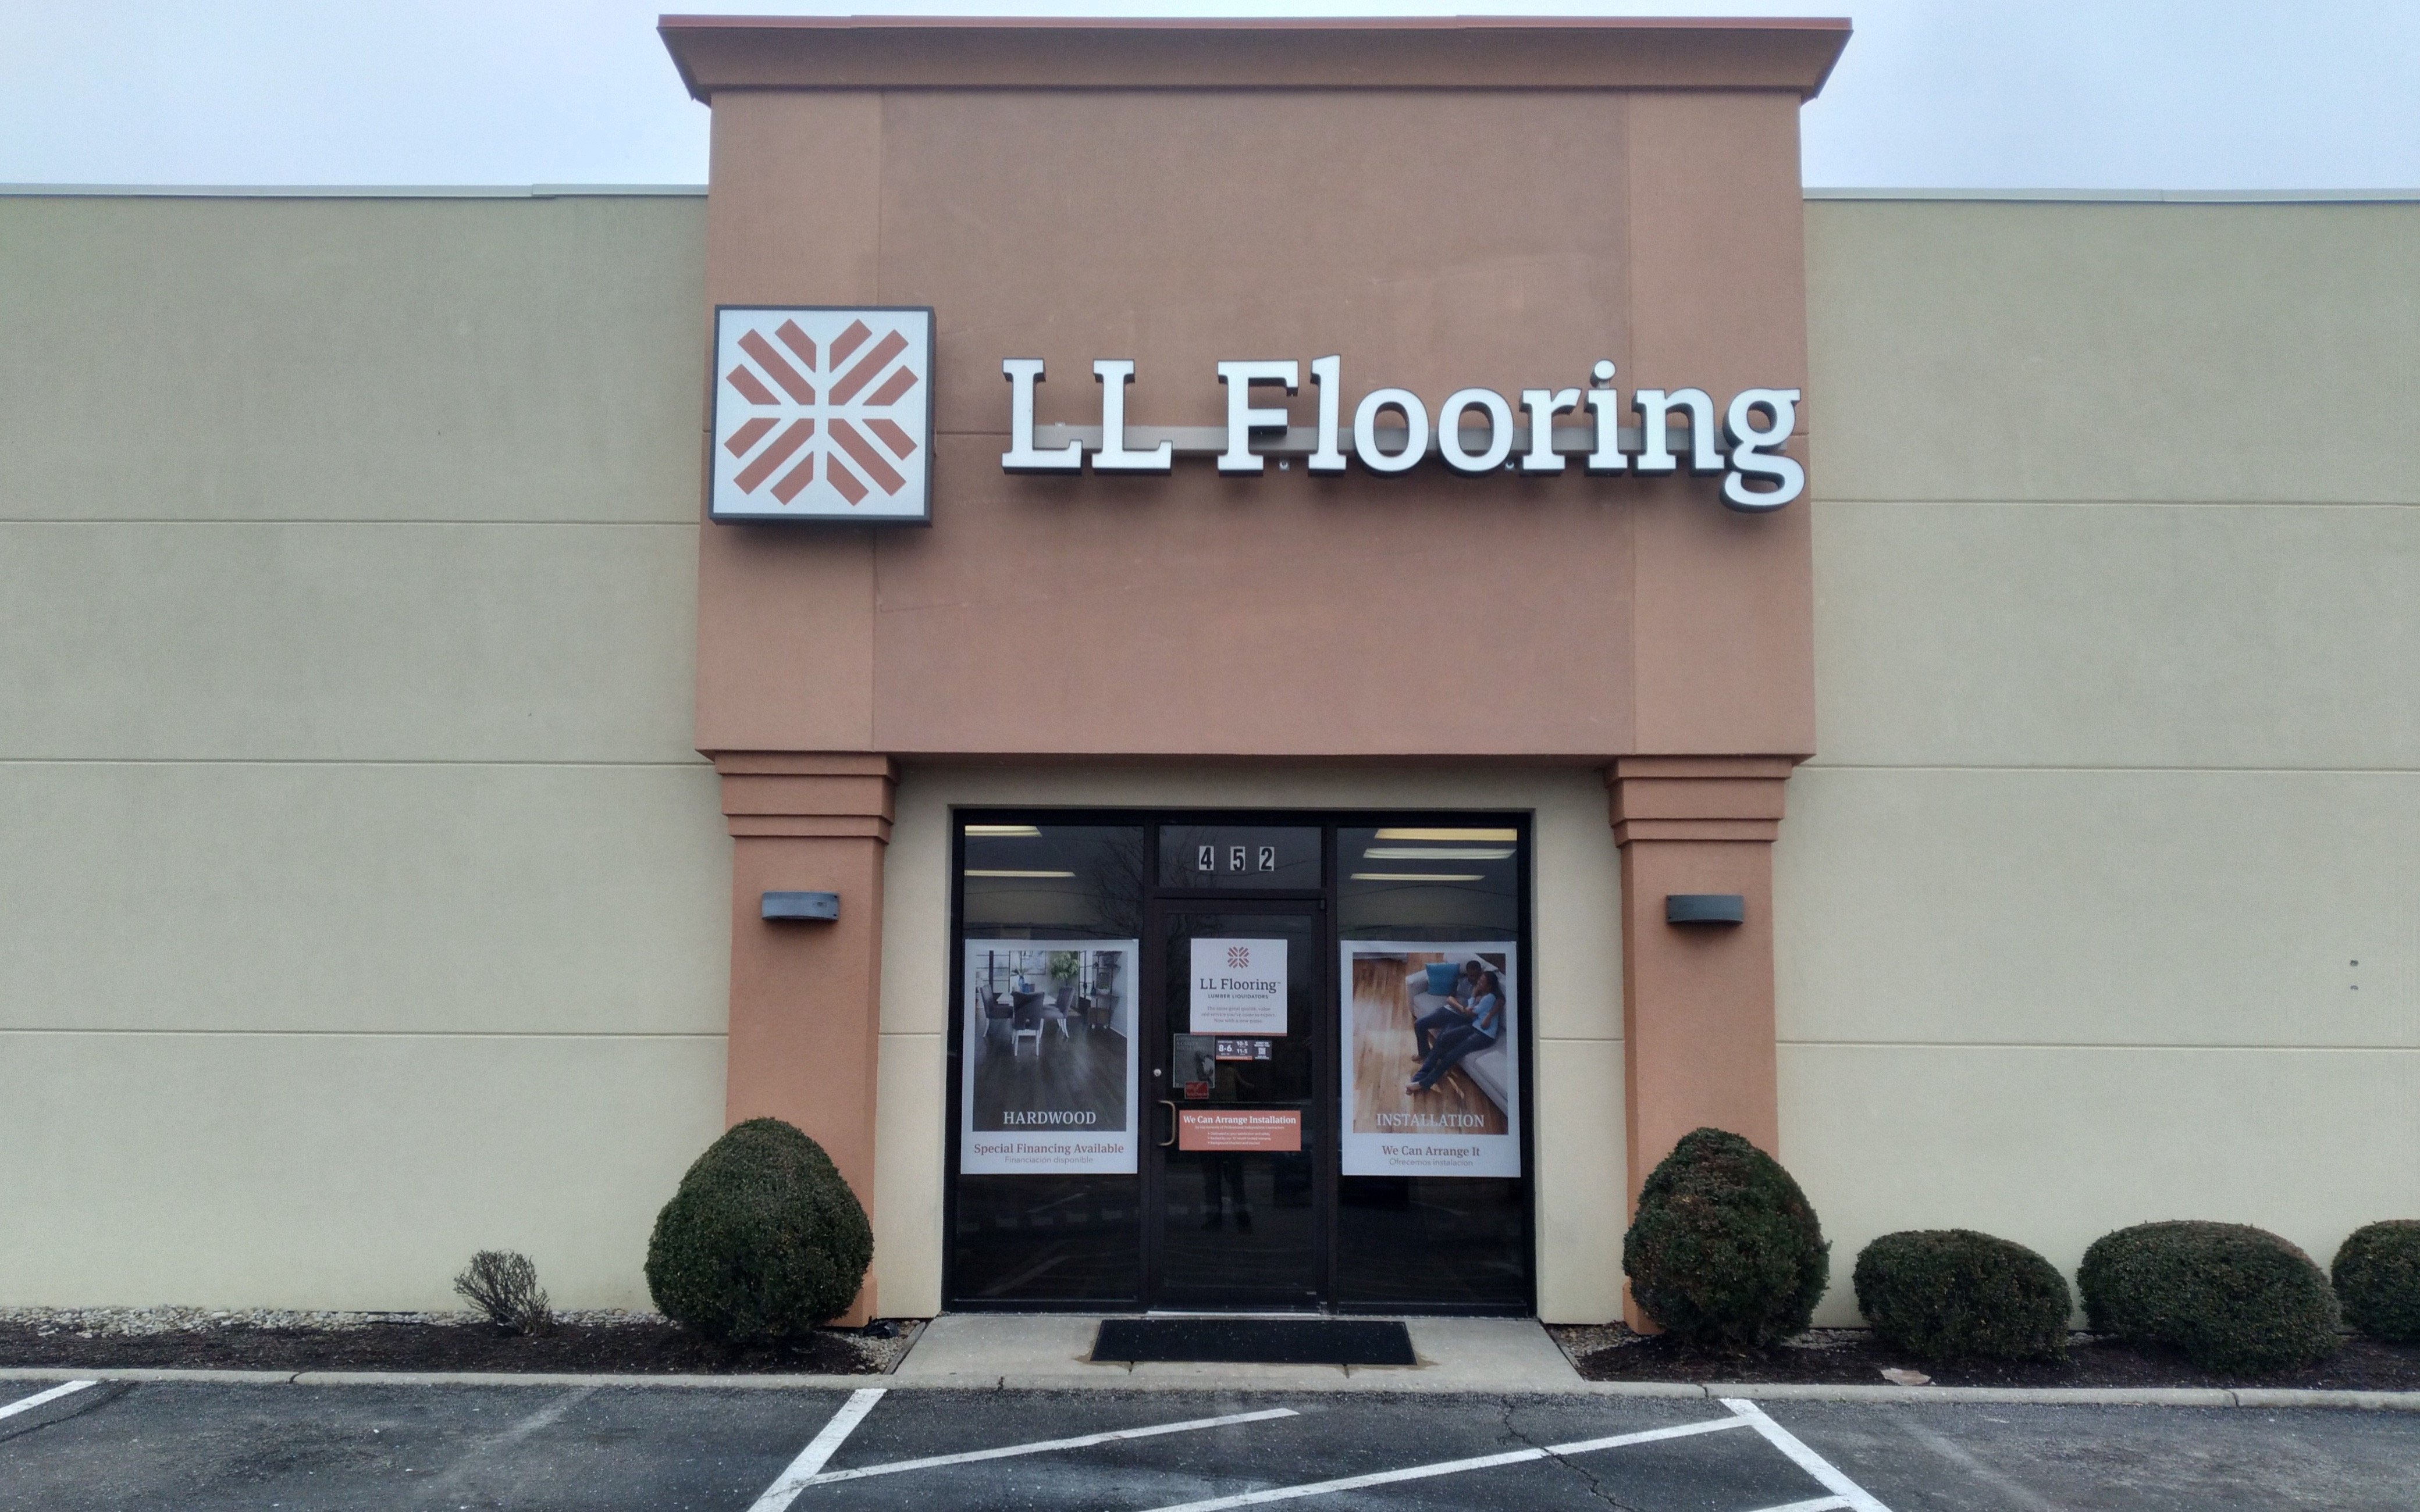 LL Flooring #1114 Dayton | 452 Springboro Pike | Storefront